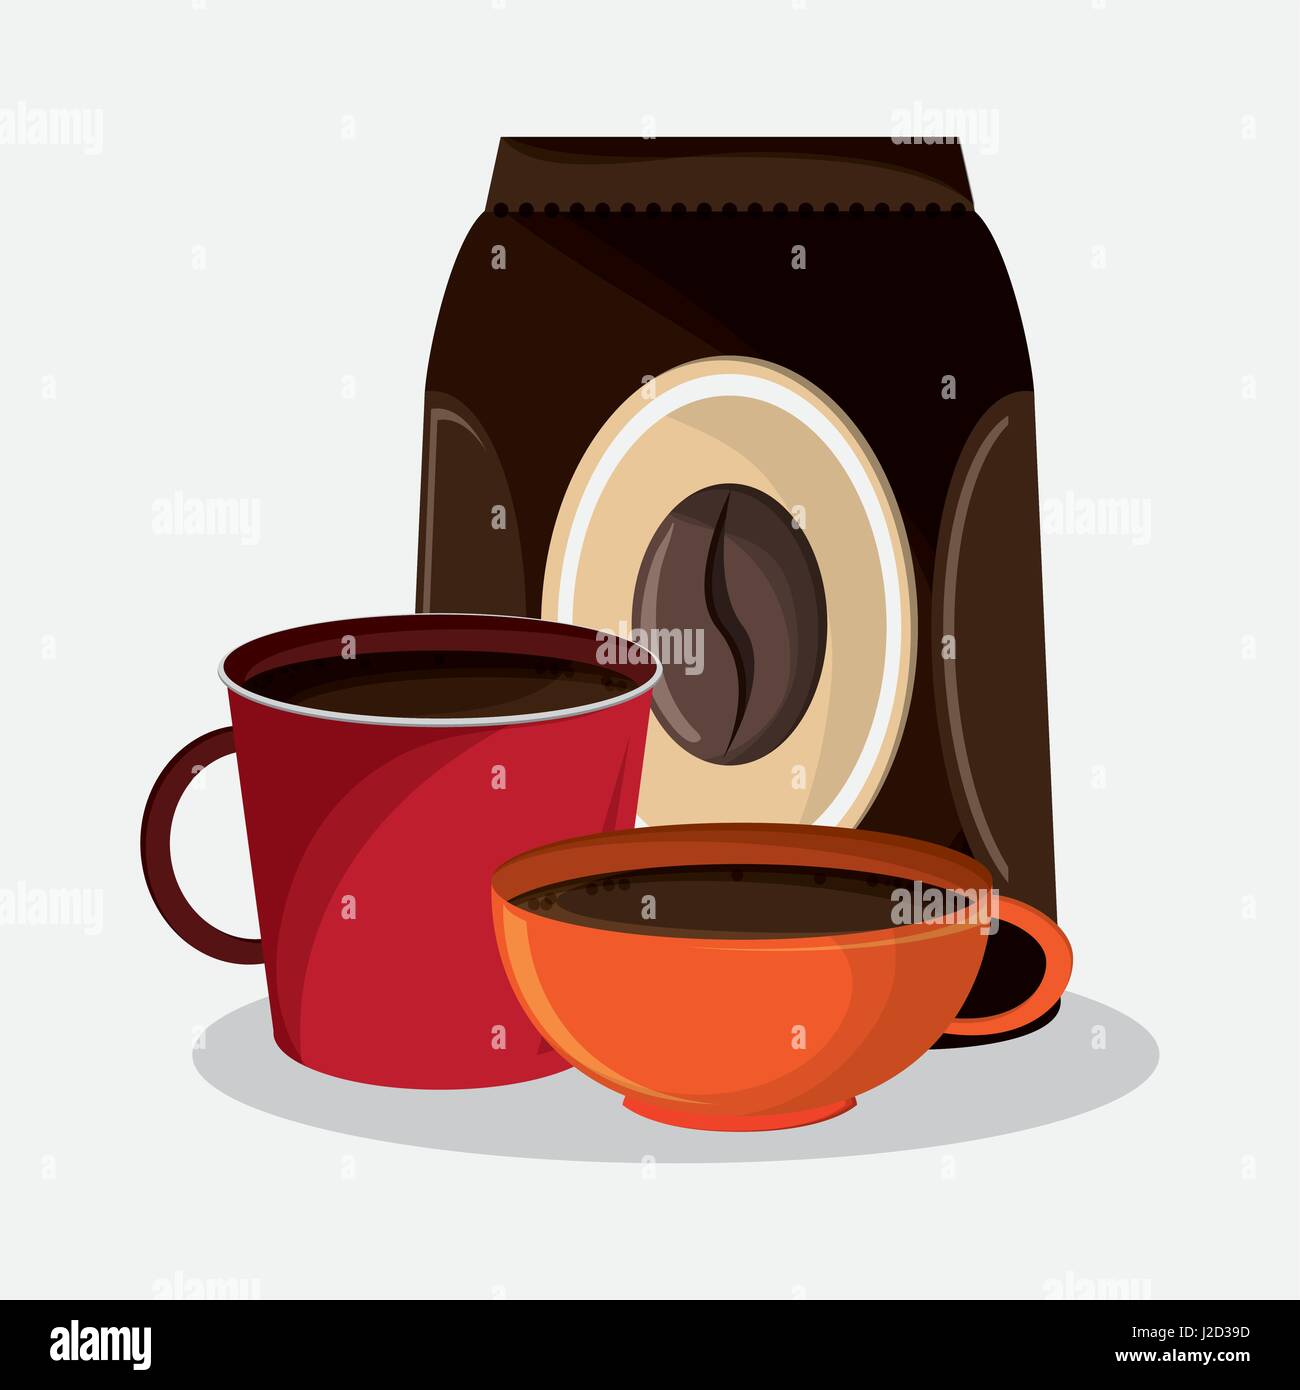 https://c8.alamy.com/comp/J2D39D/set-porcelain-mugs-and-packaking-of-coffee-J2D39D.jpg